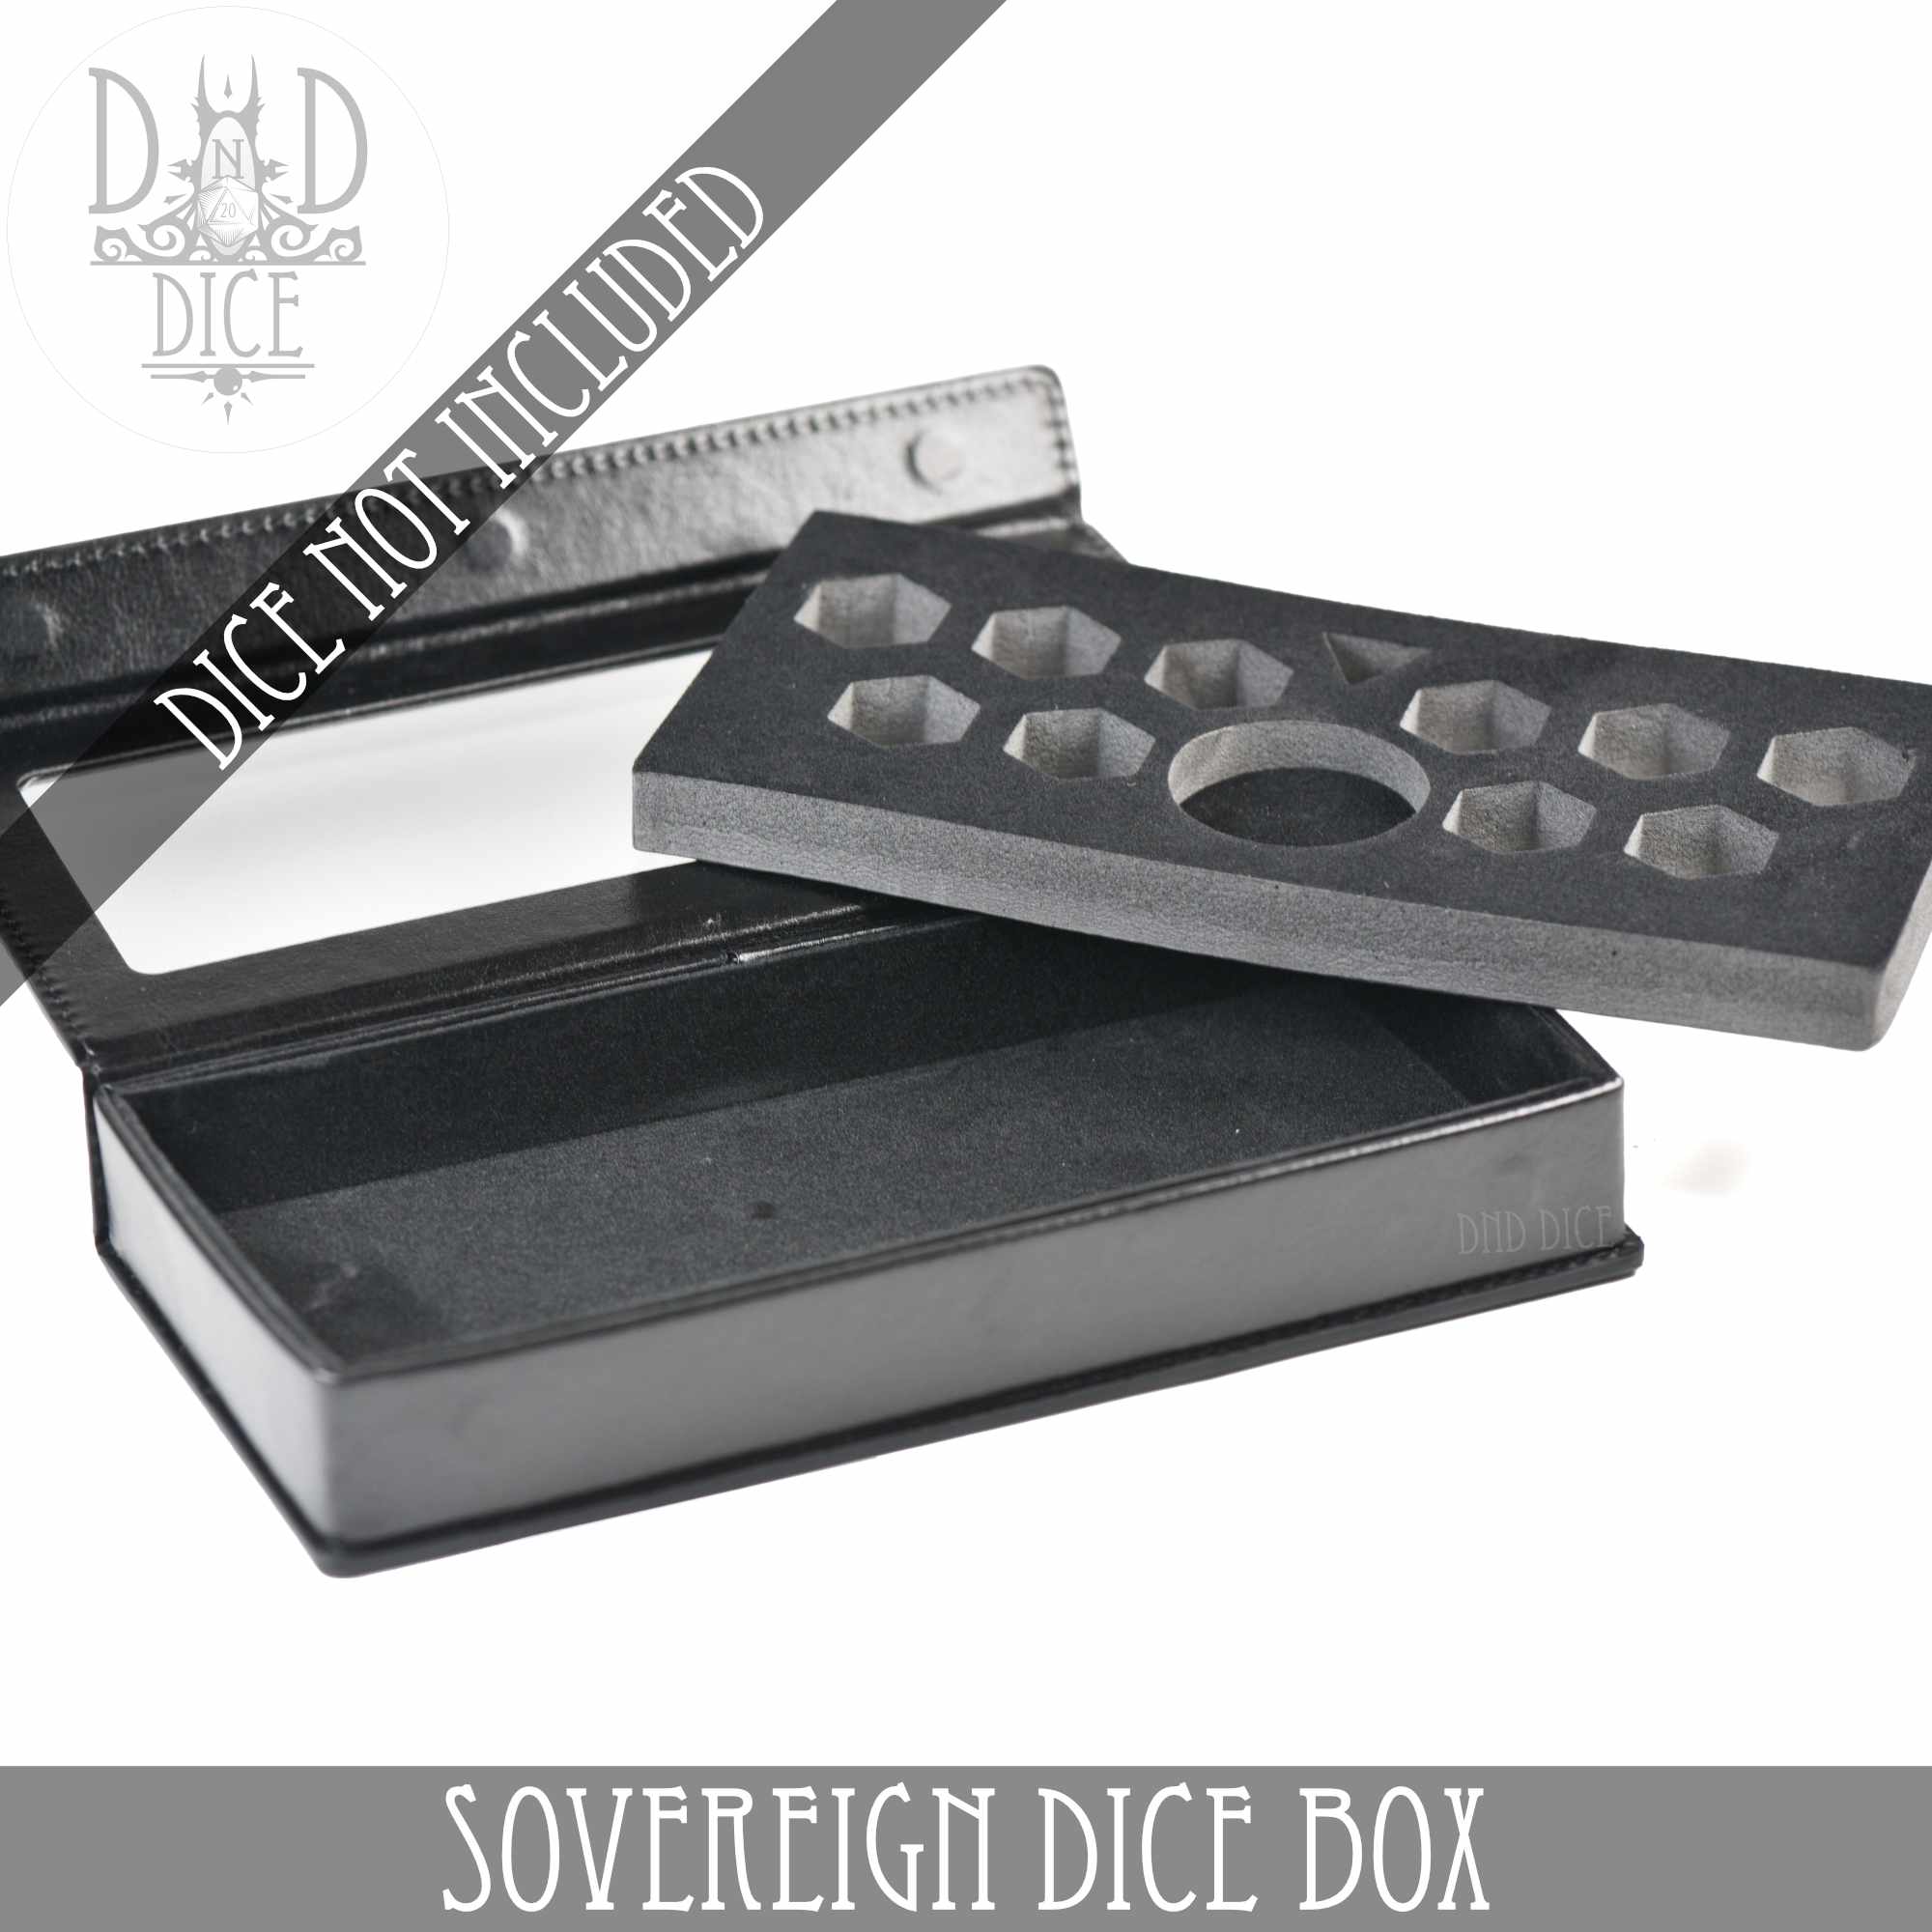 Sovereign Gift Box - 11 Dice Set